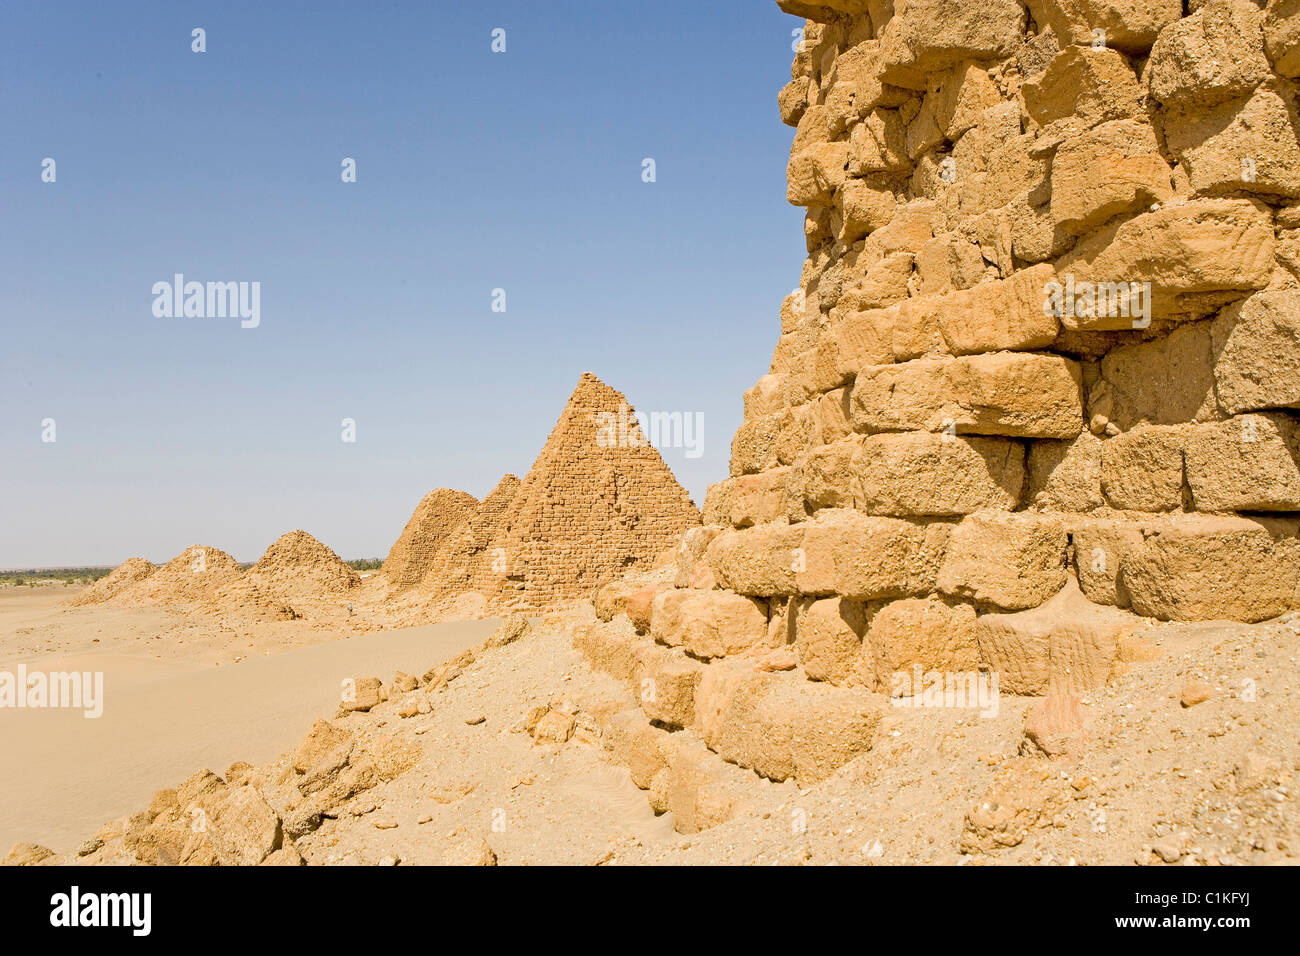 Sudan High Nubia province of Ash Shamaliya desert of Baiyuda (east Sahara) Nuri archaeological site pyramids used as tombs for Stock Photo